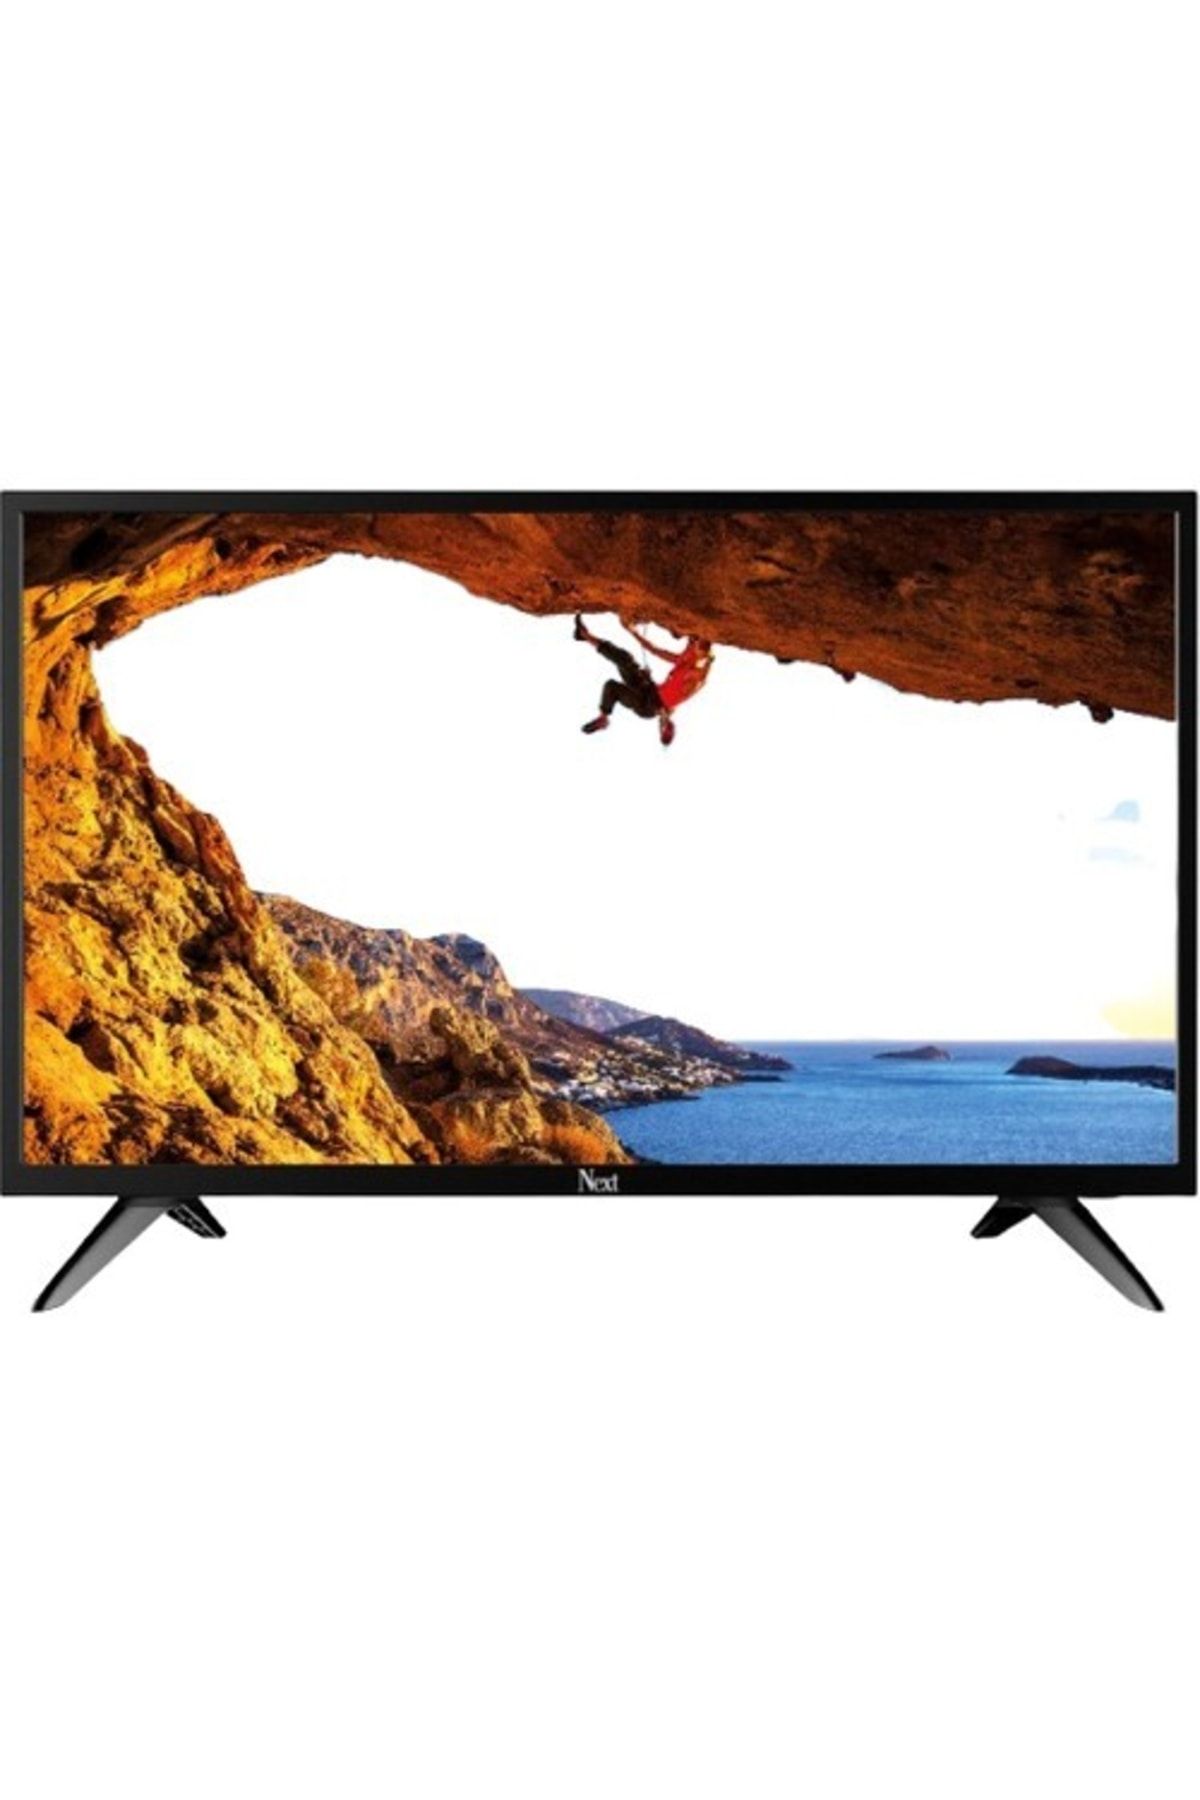 Next YE-22020 22" 55 Ekran Full HD LED Monitör TV